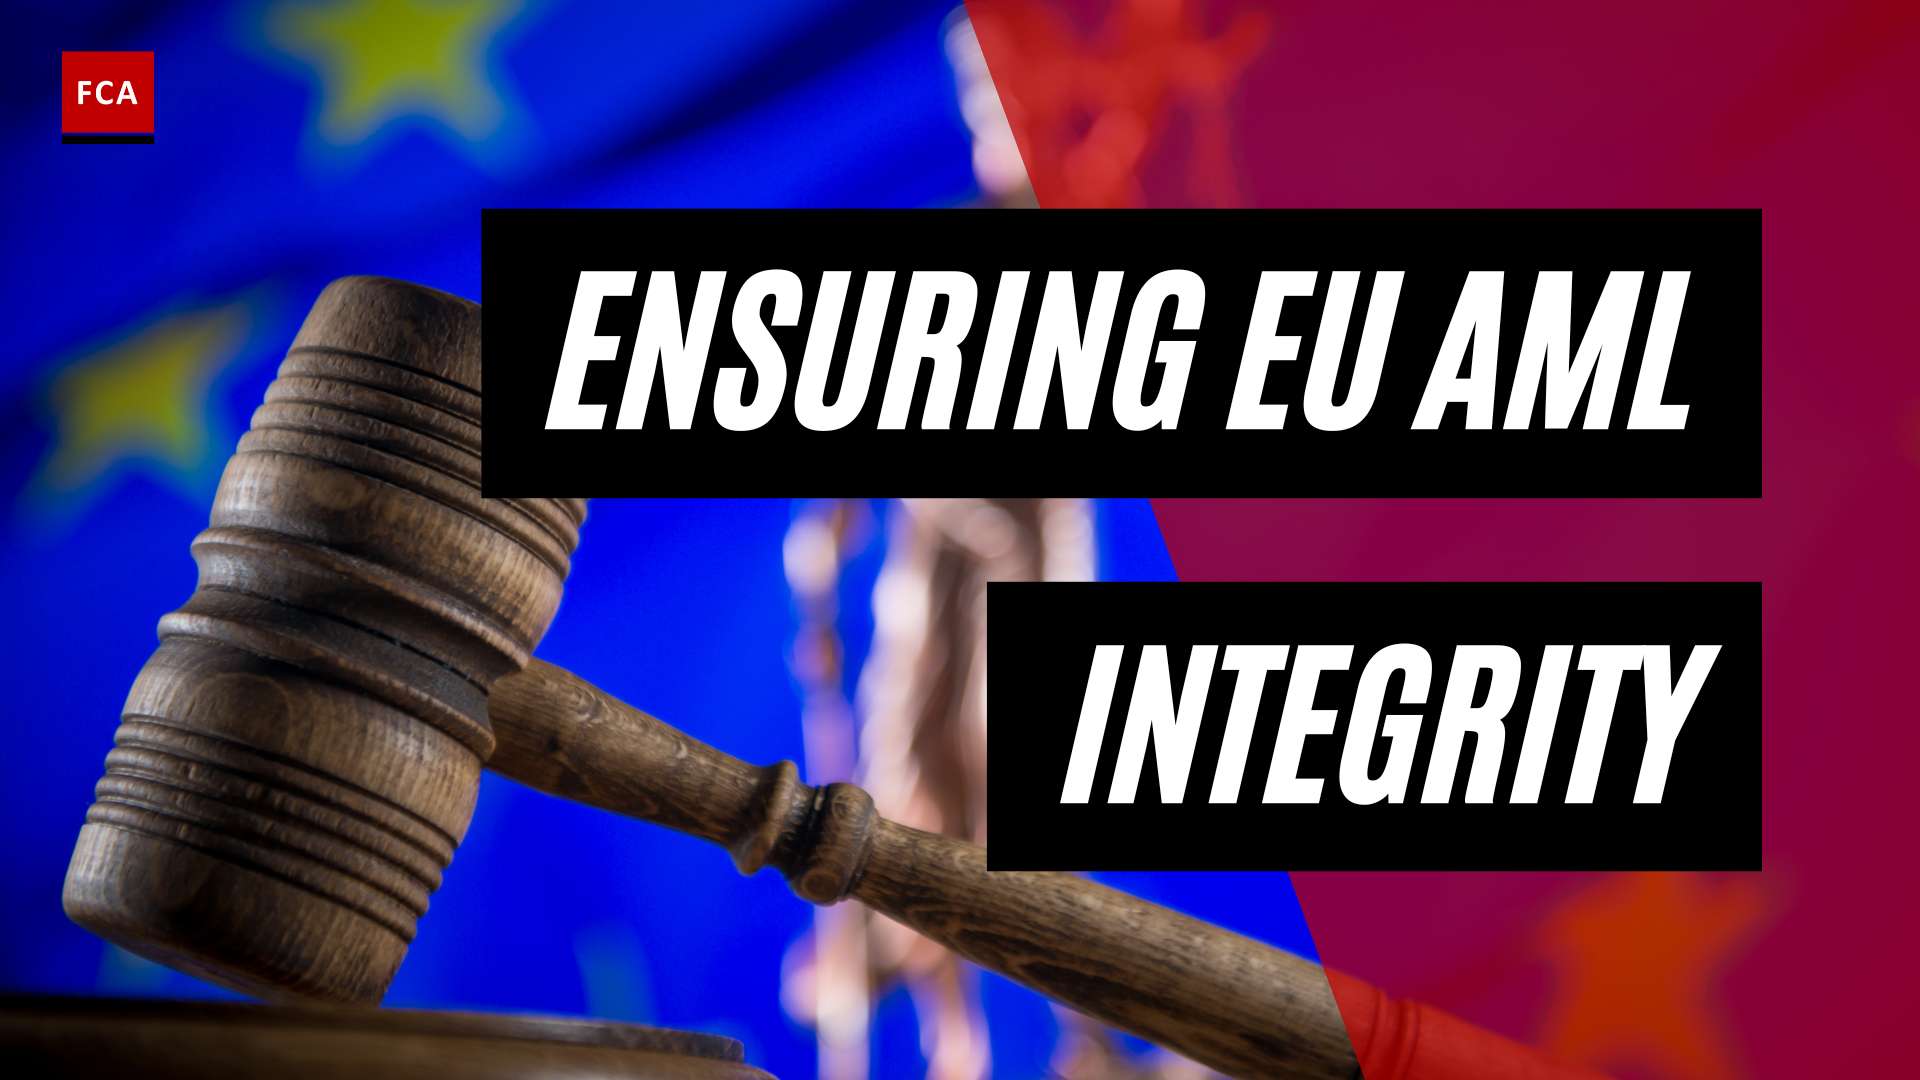 Breaking Boundaries: European Union Aml Standards In A Global Context